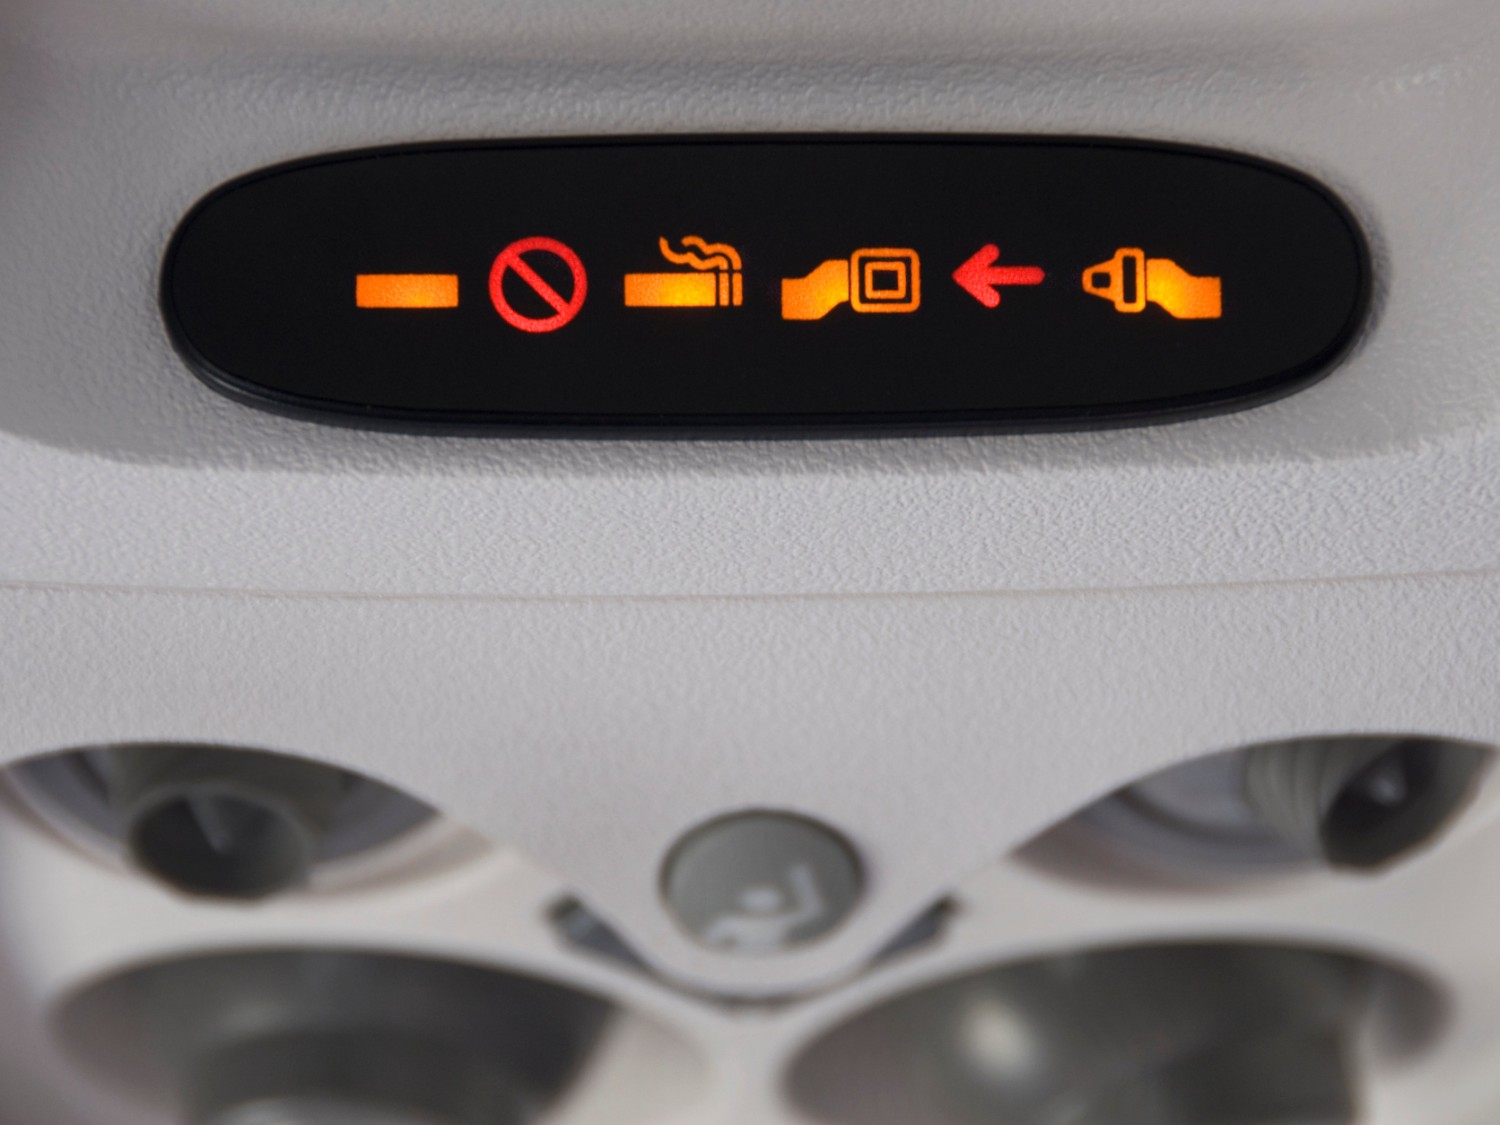 dây an toàn (seat belt) trên máy bay